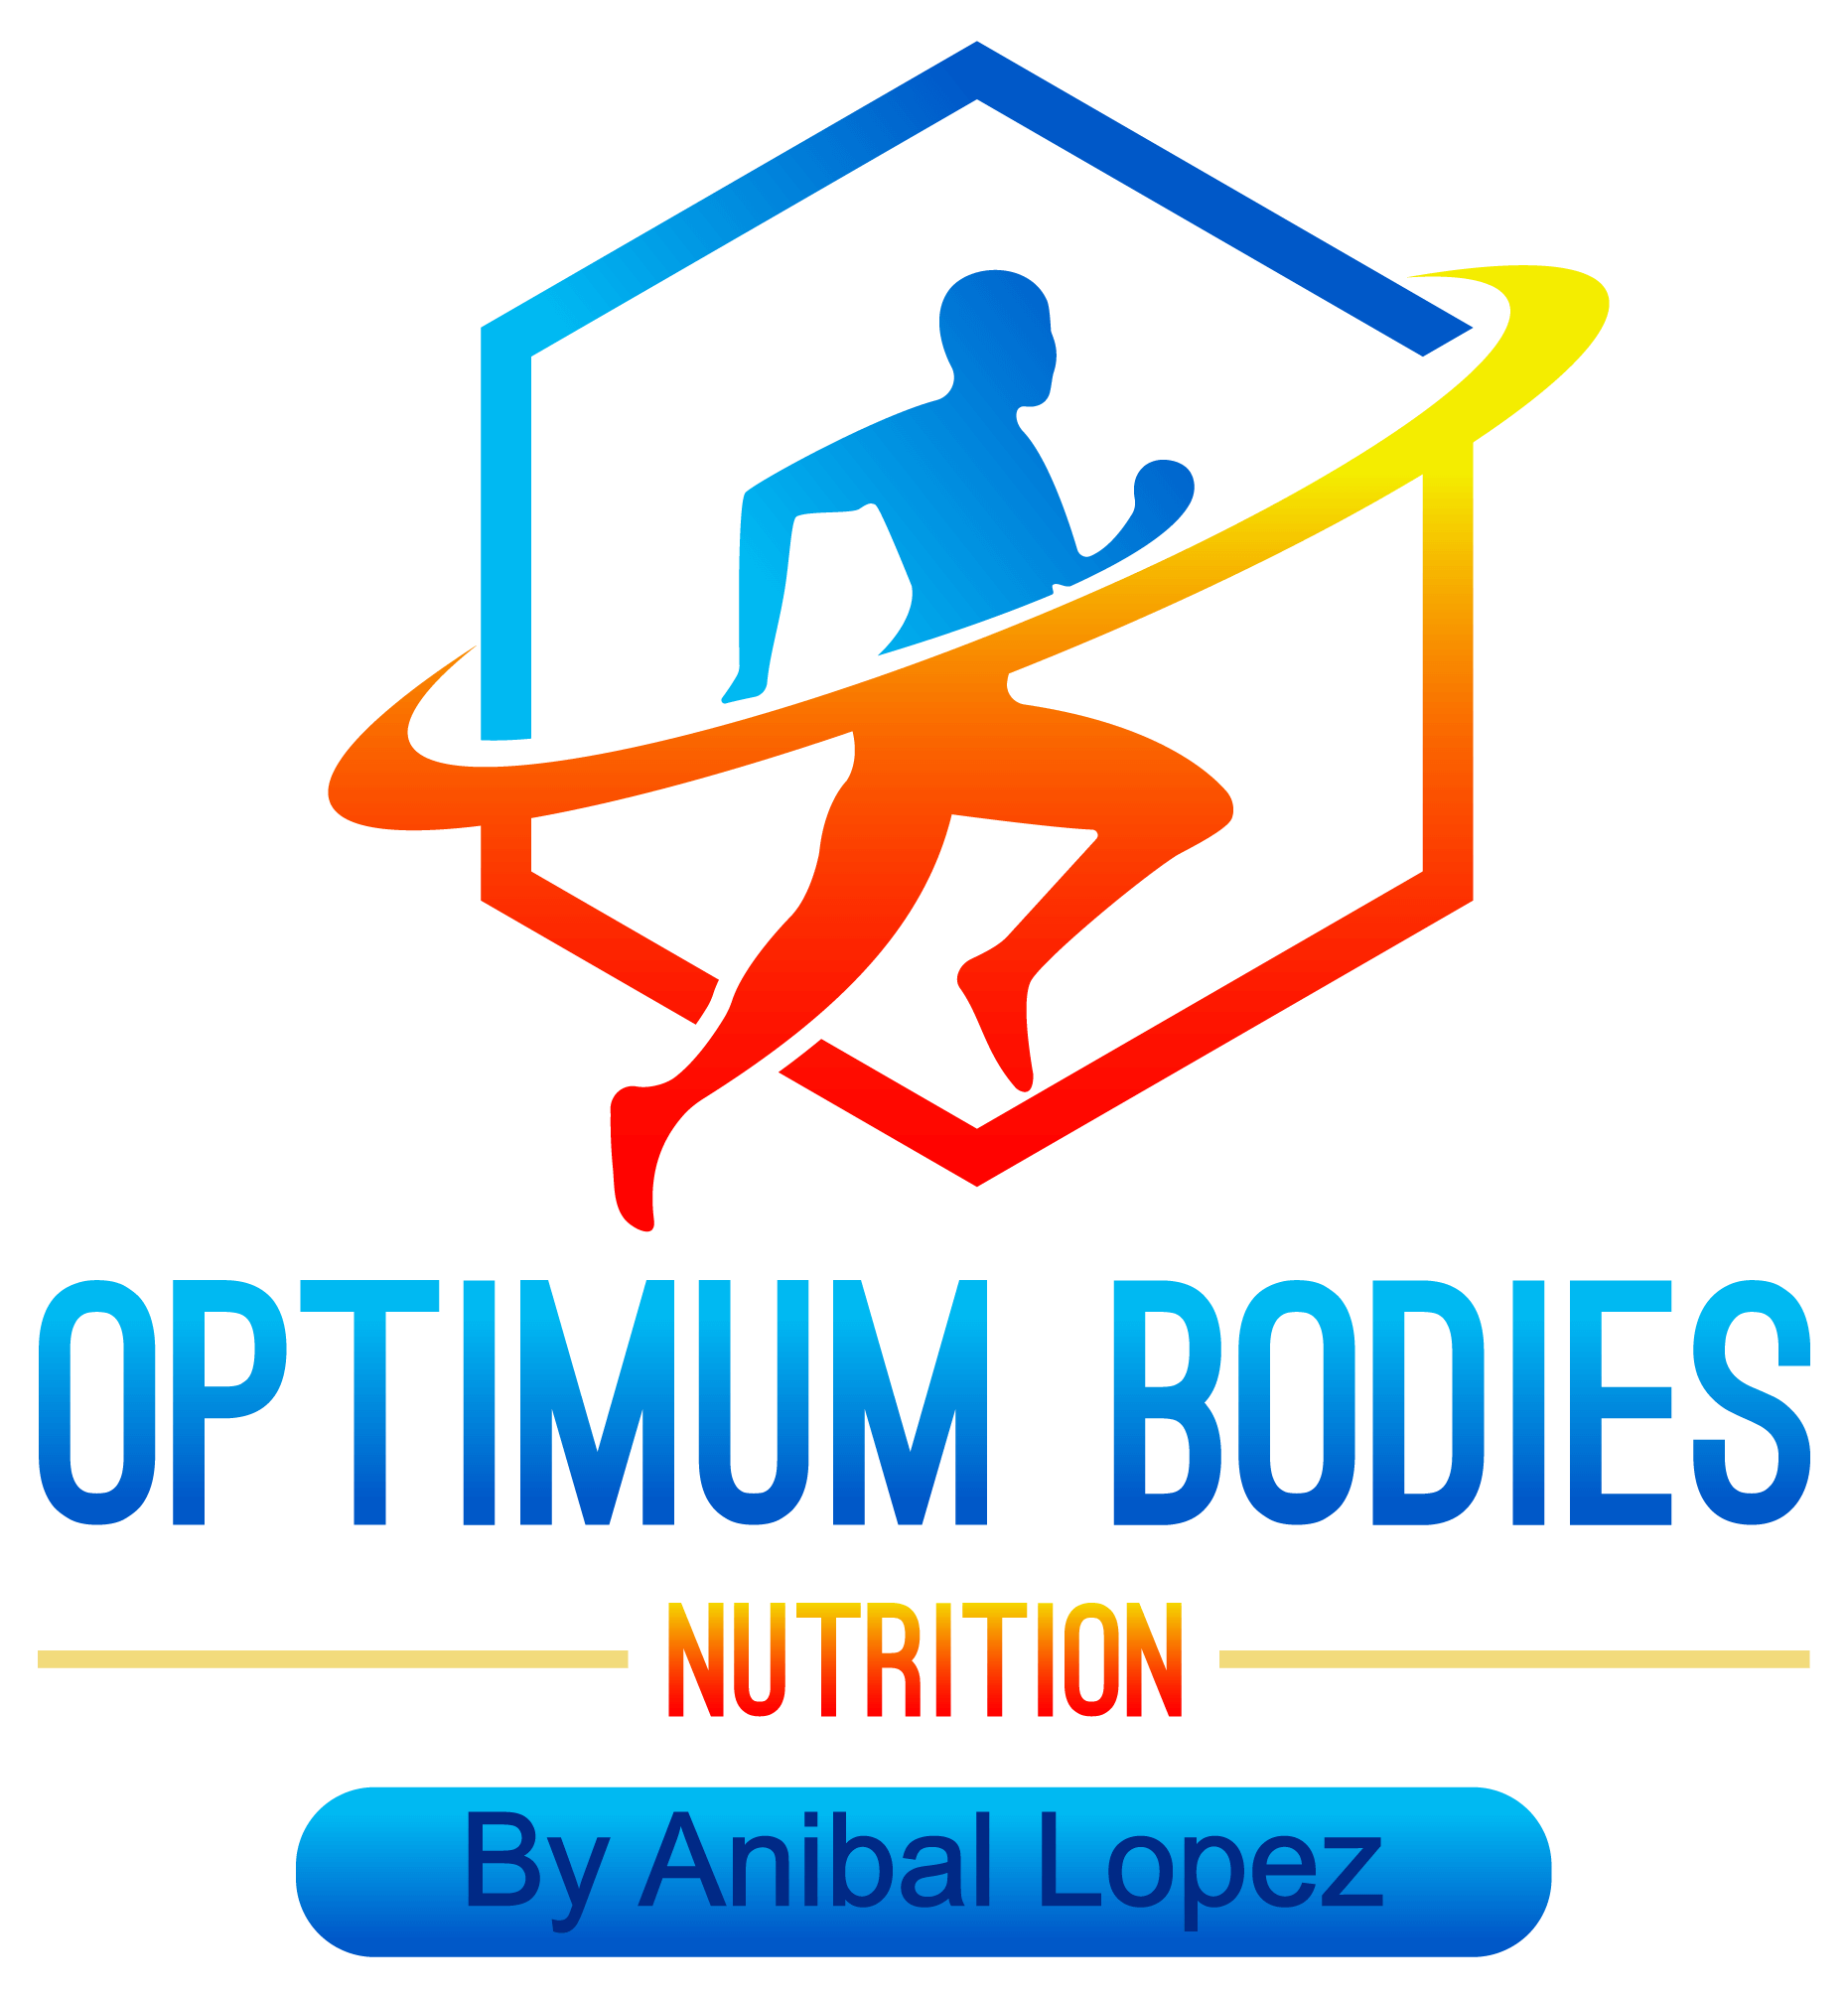 Online Nutrition Store Premium Bodybuilding Nutrition Supplements